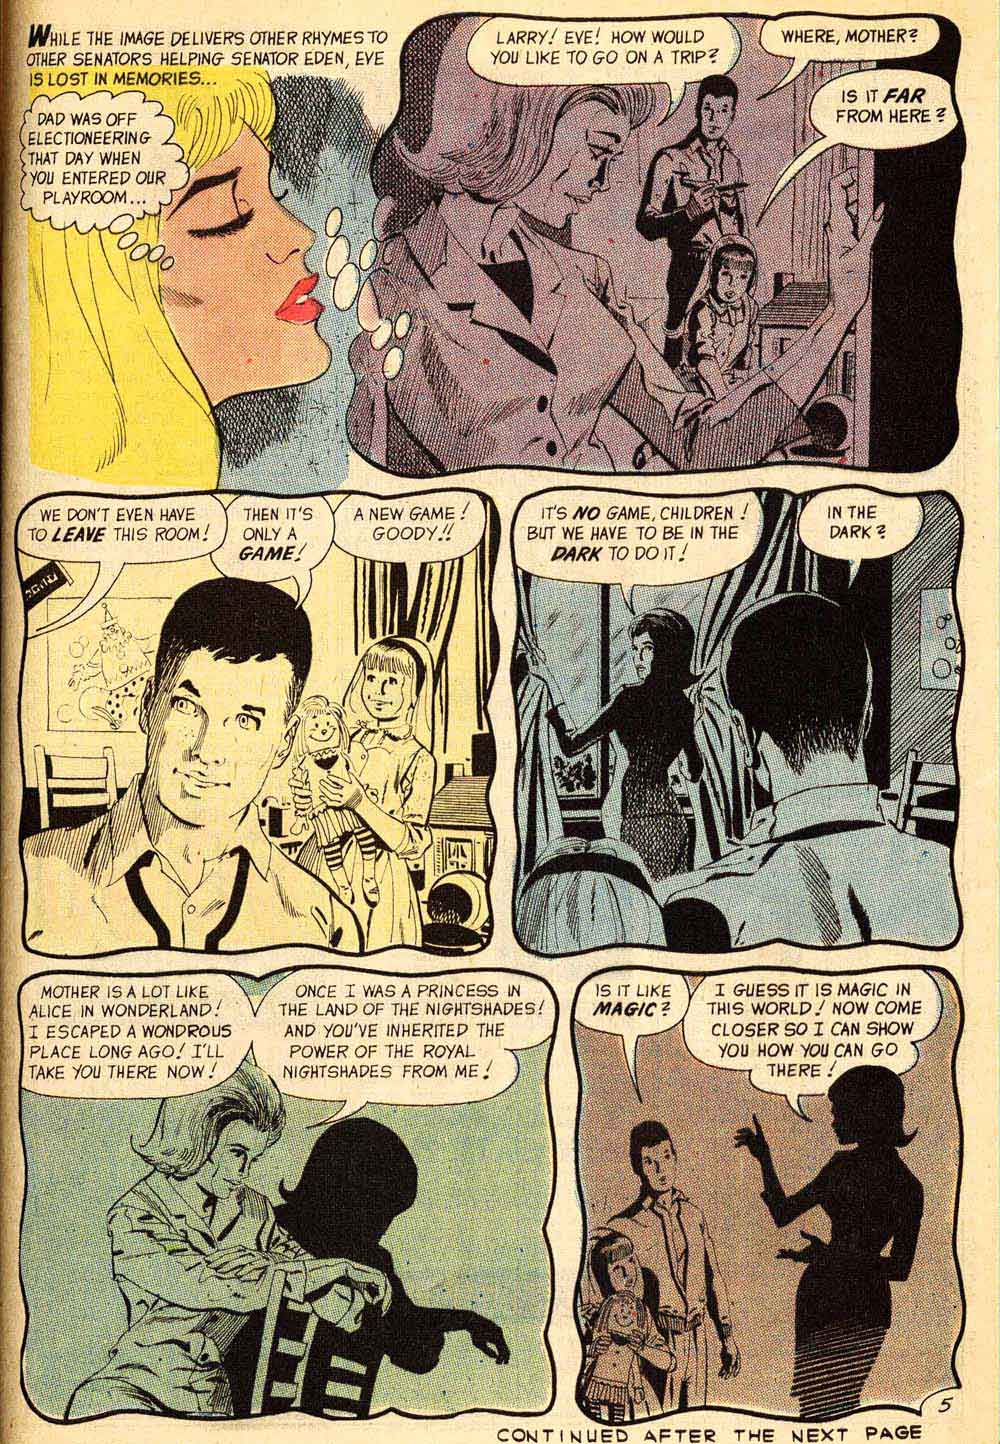 Nightshade's back-up strip from Captain Atom #87 (1967) from Charlton Comics by David Kaler and Jim Aparo